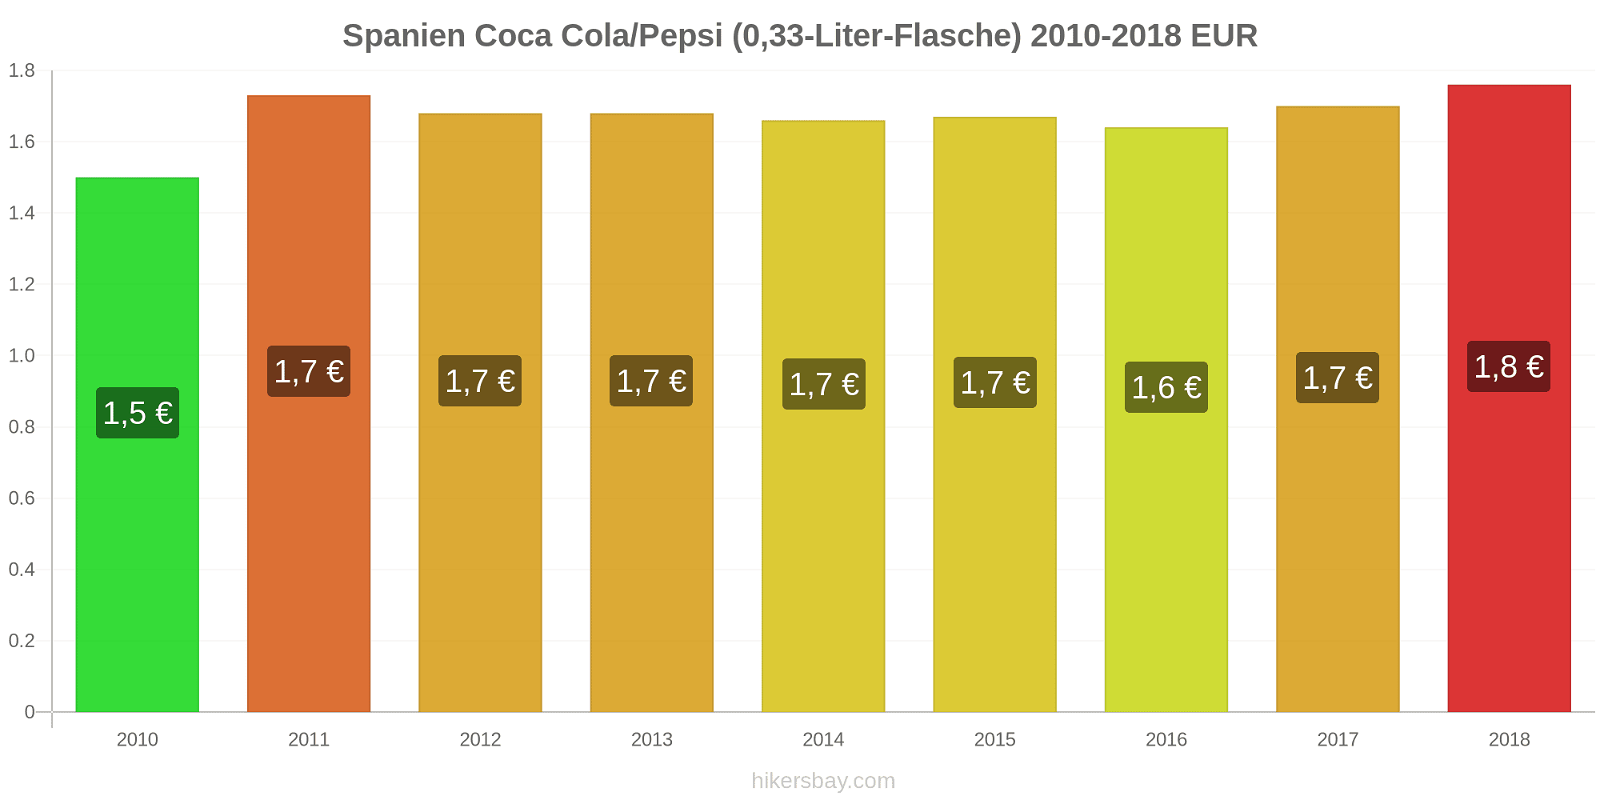 Spanien Preisänderungen Coke/Pepsi (0,33-Liter-Flasche) hikersbay.com